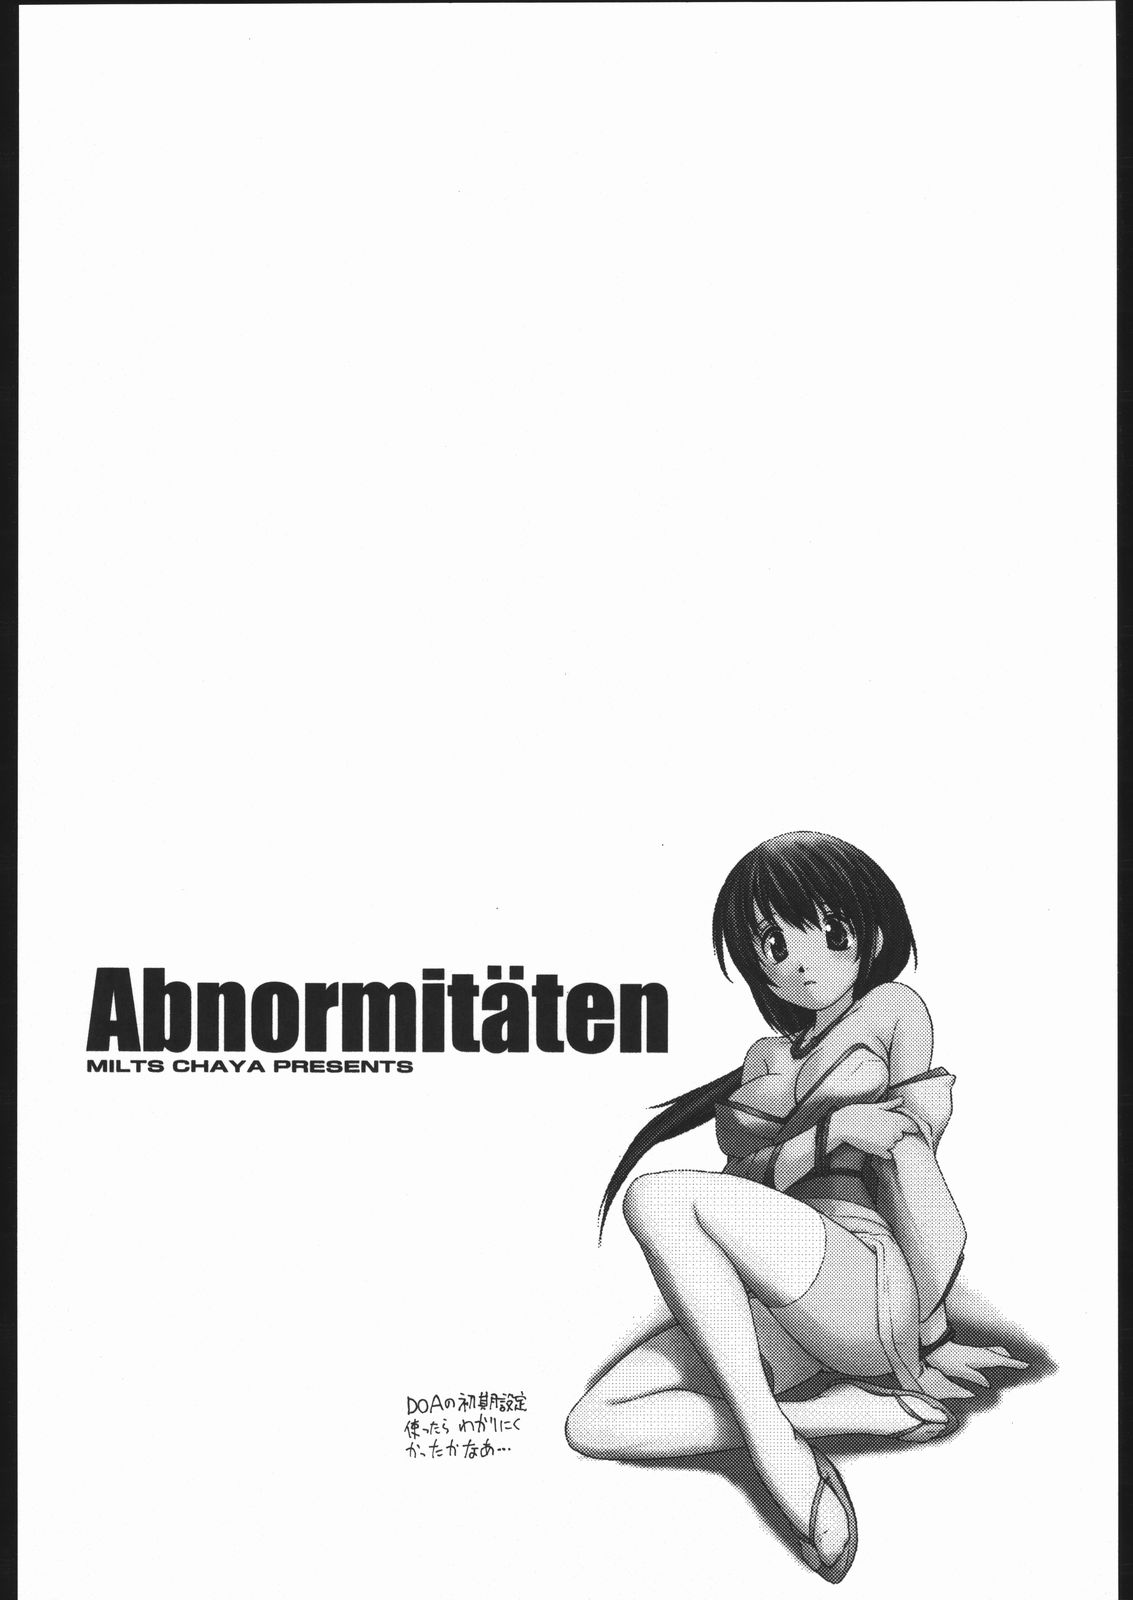 [Dead or Alive] Abnormitaten (MILTS CHAYA) [みるつ茶屋] Abnormitaten